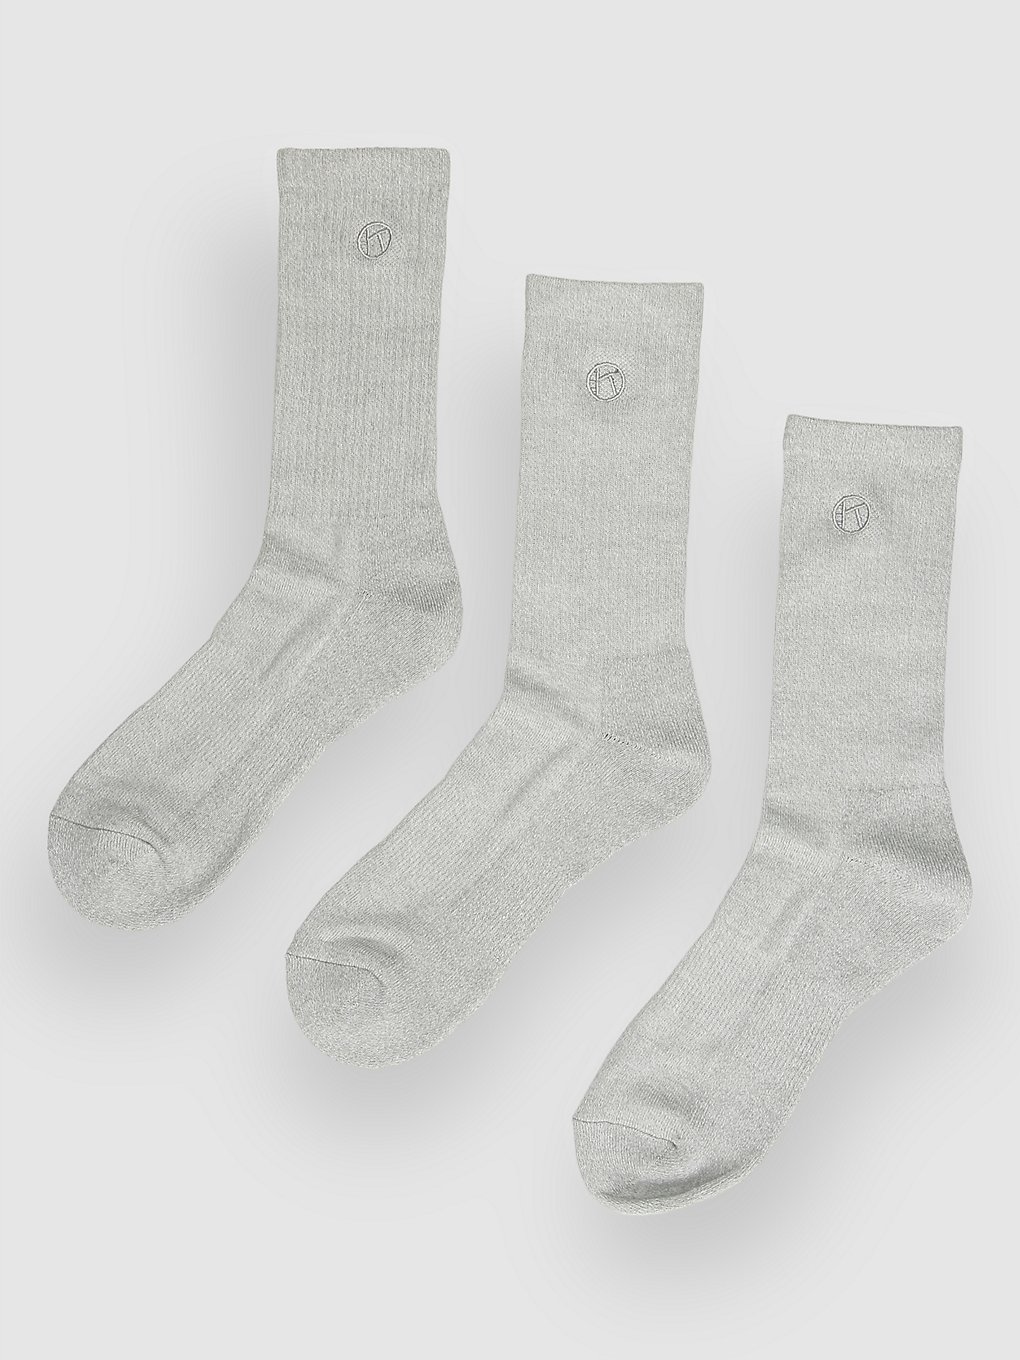 Kazane Bartolo 3 Pack Socken lt heather grey kaufen